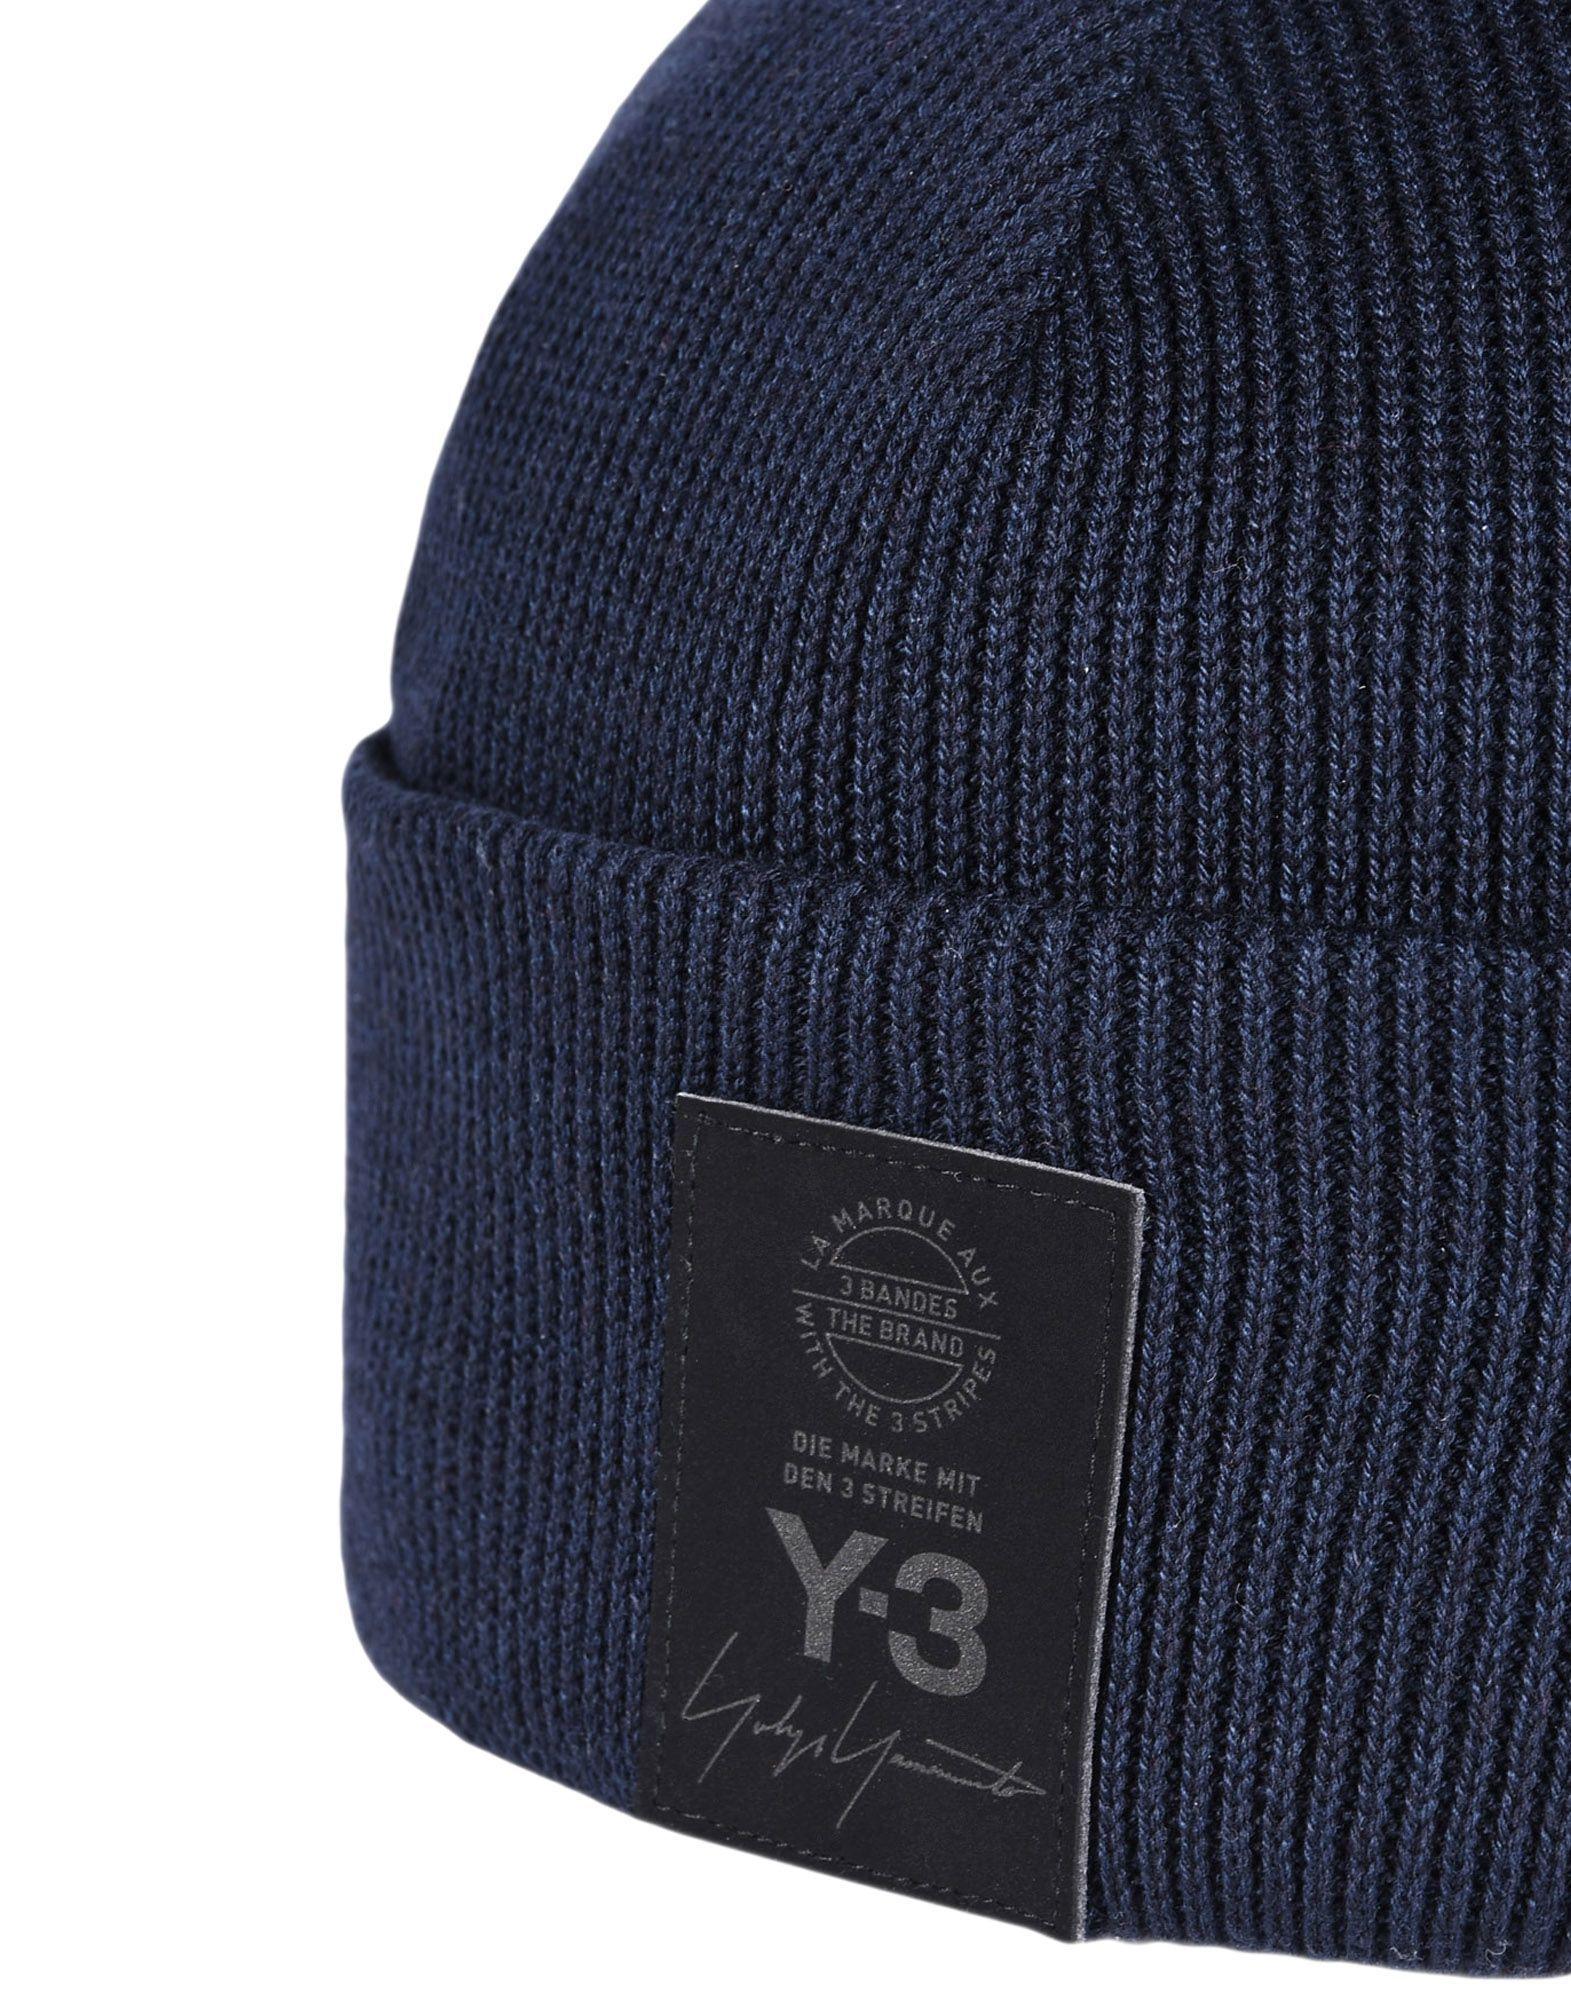 Beanie with Logo - Y 3 LOGO BEANIE Beanies | Adidas Y-3 Official Site